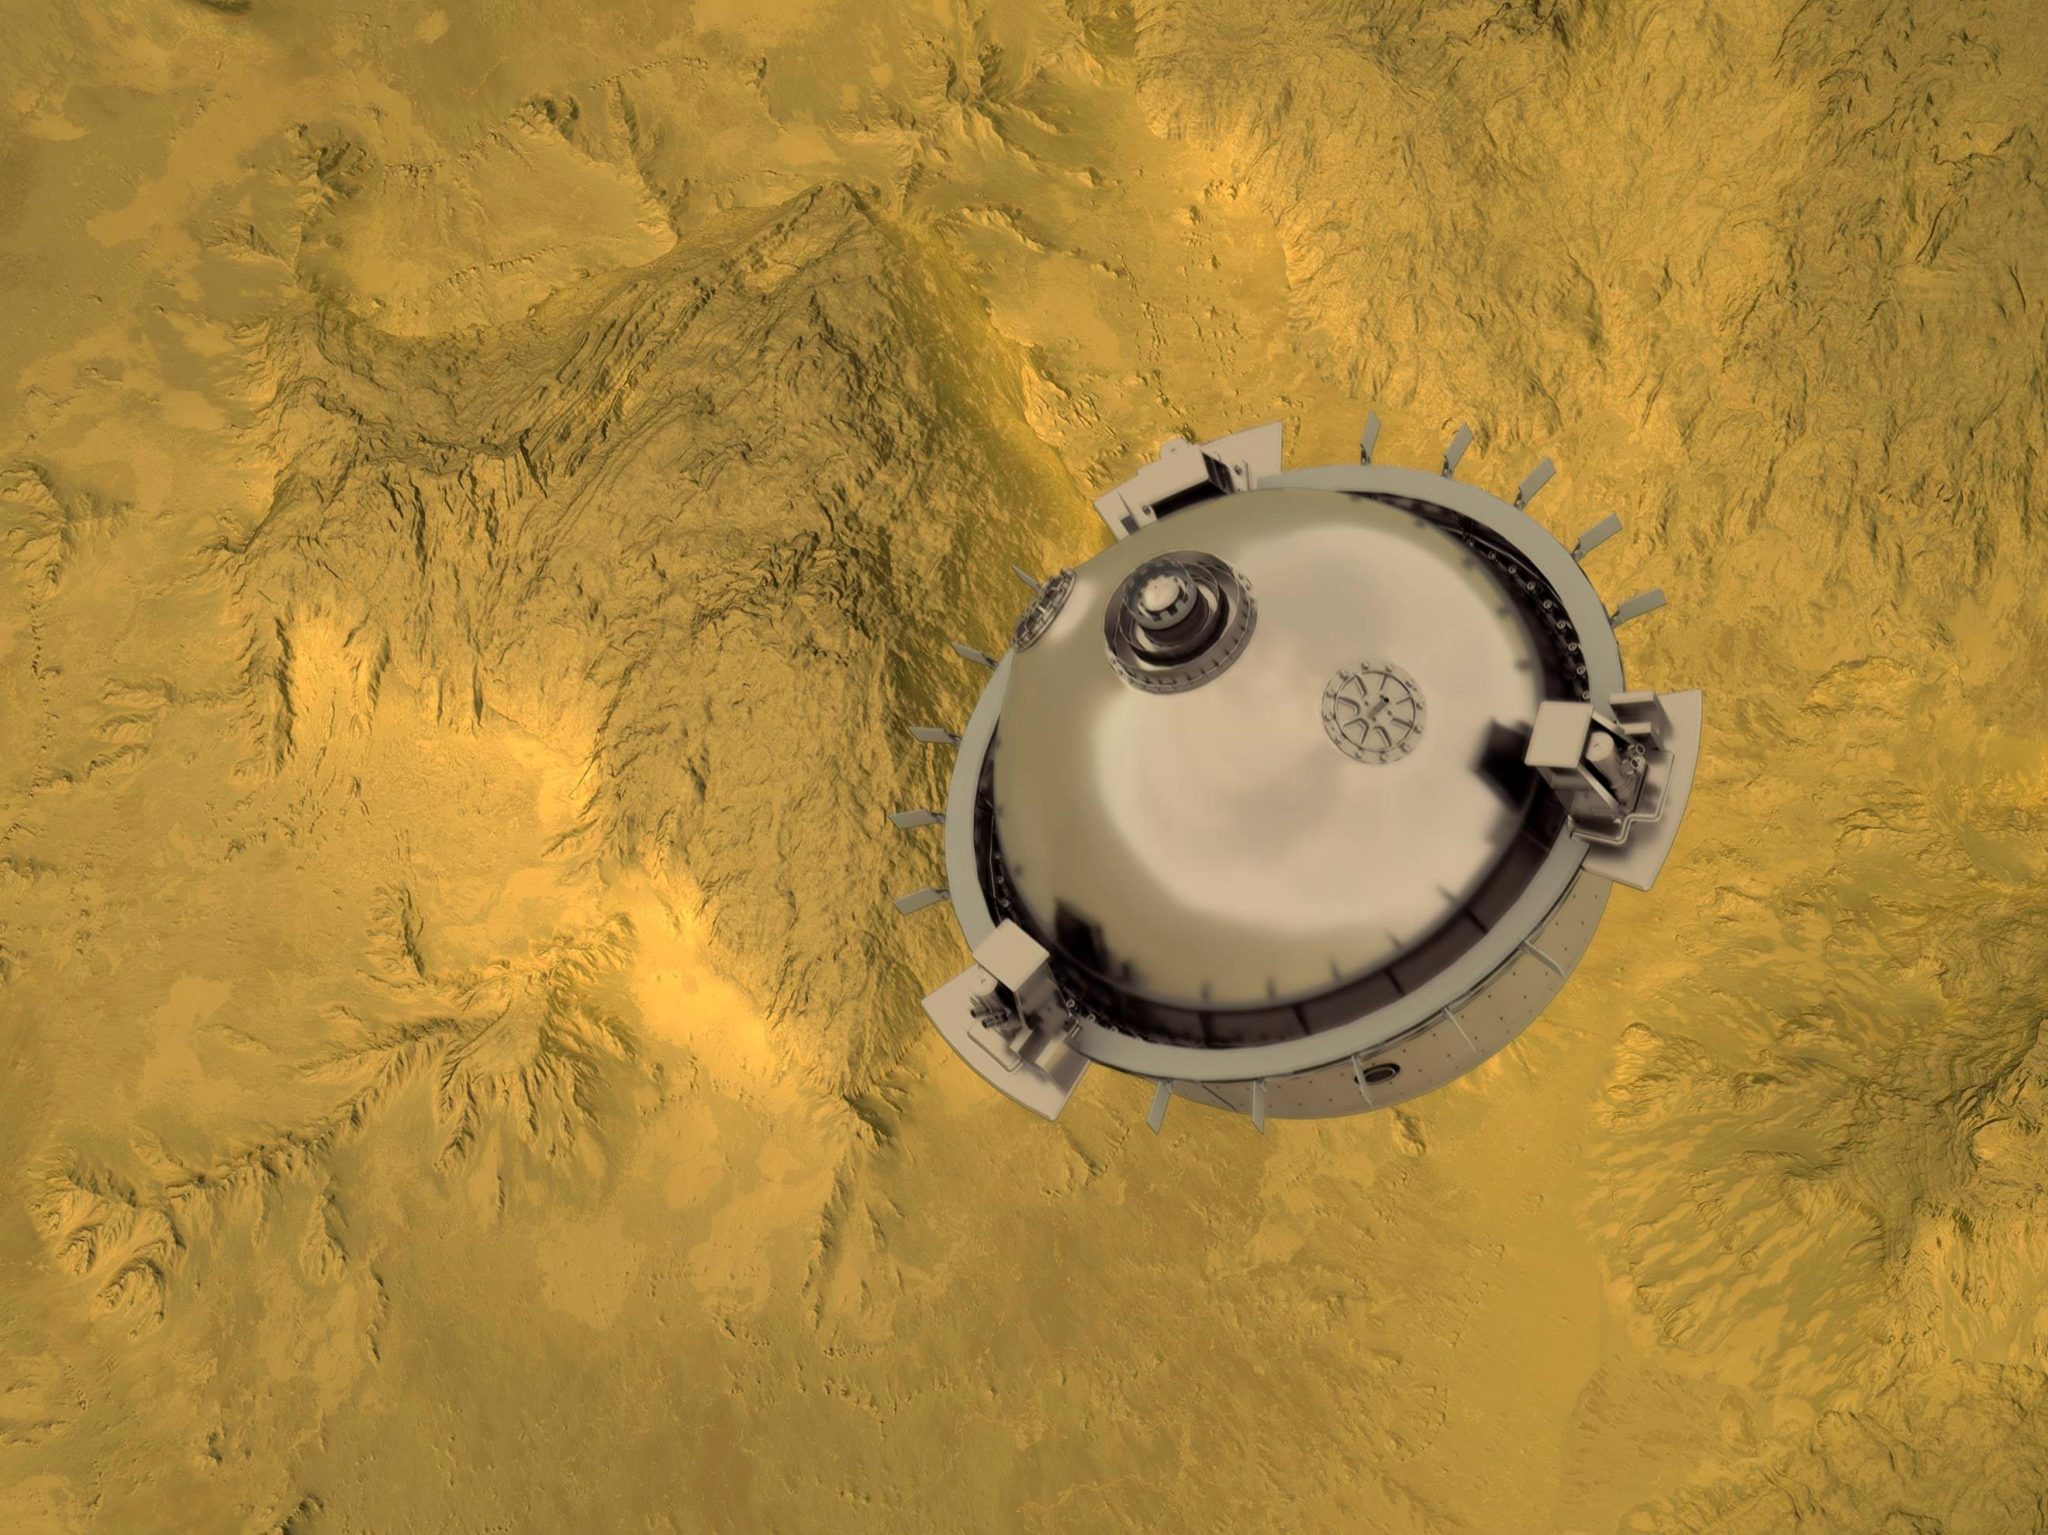 Da Vinci probe near the surface of Venus